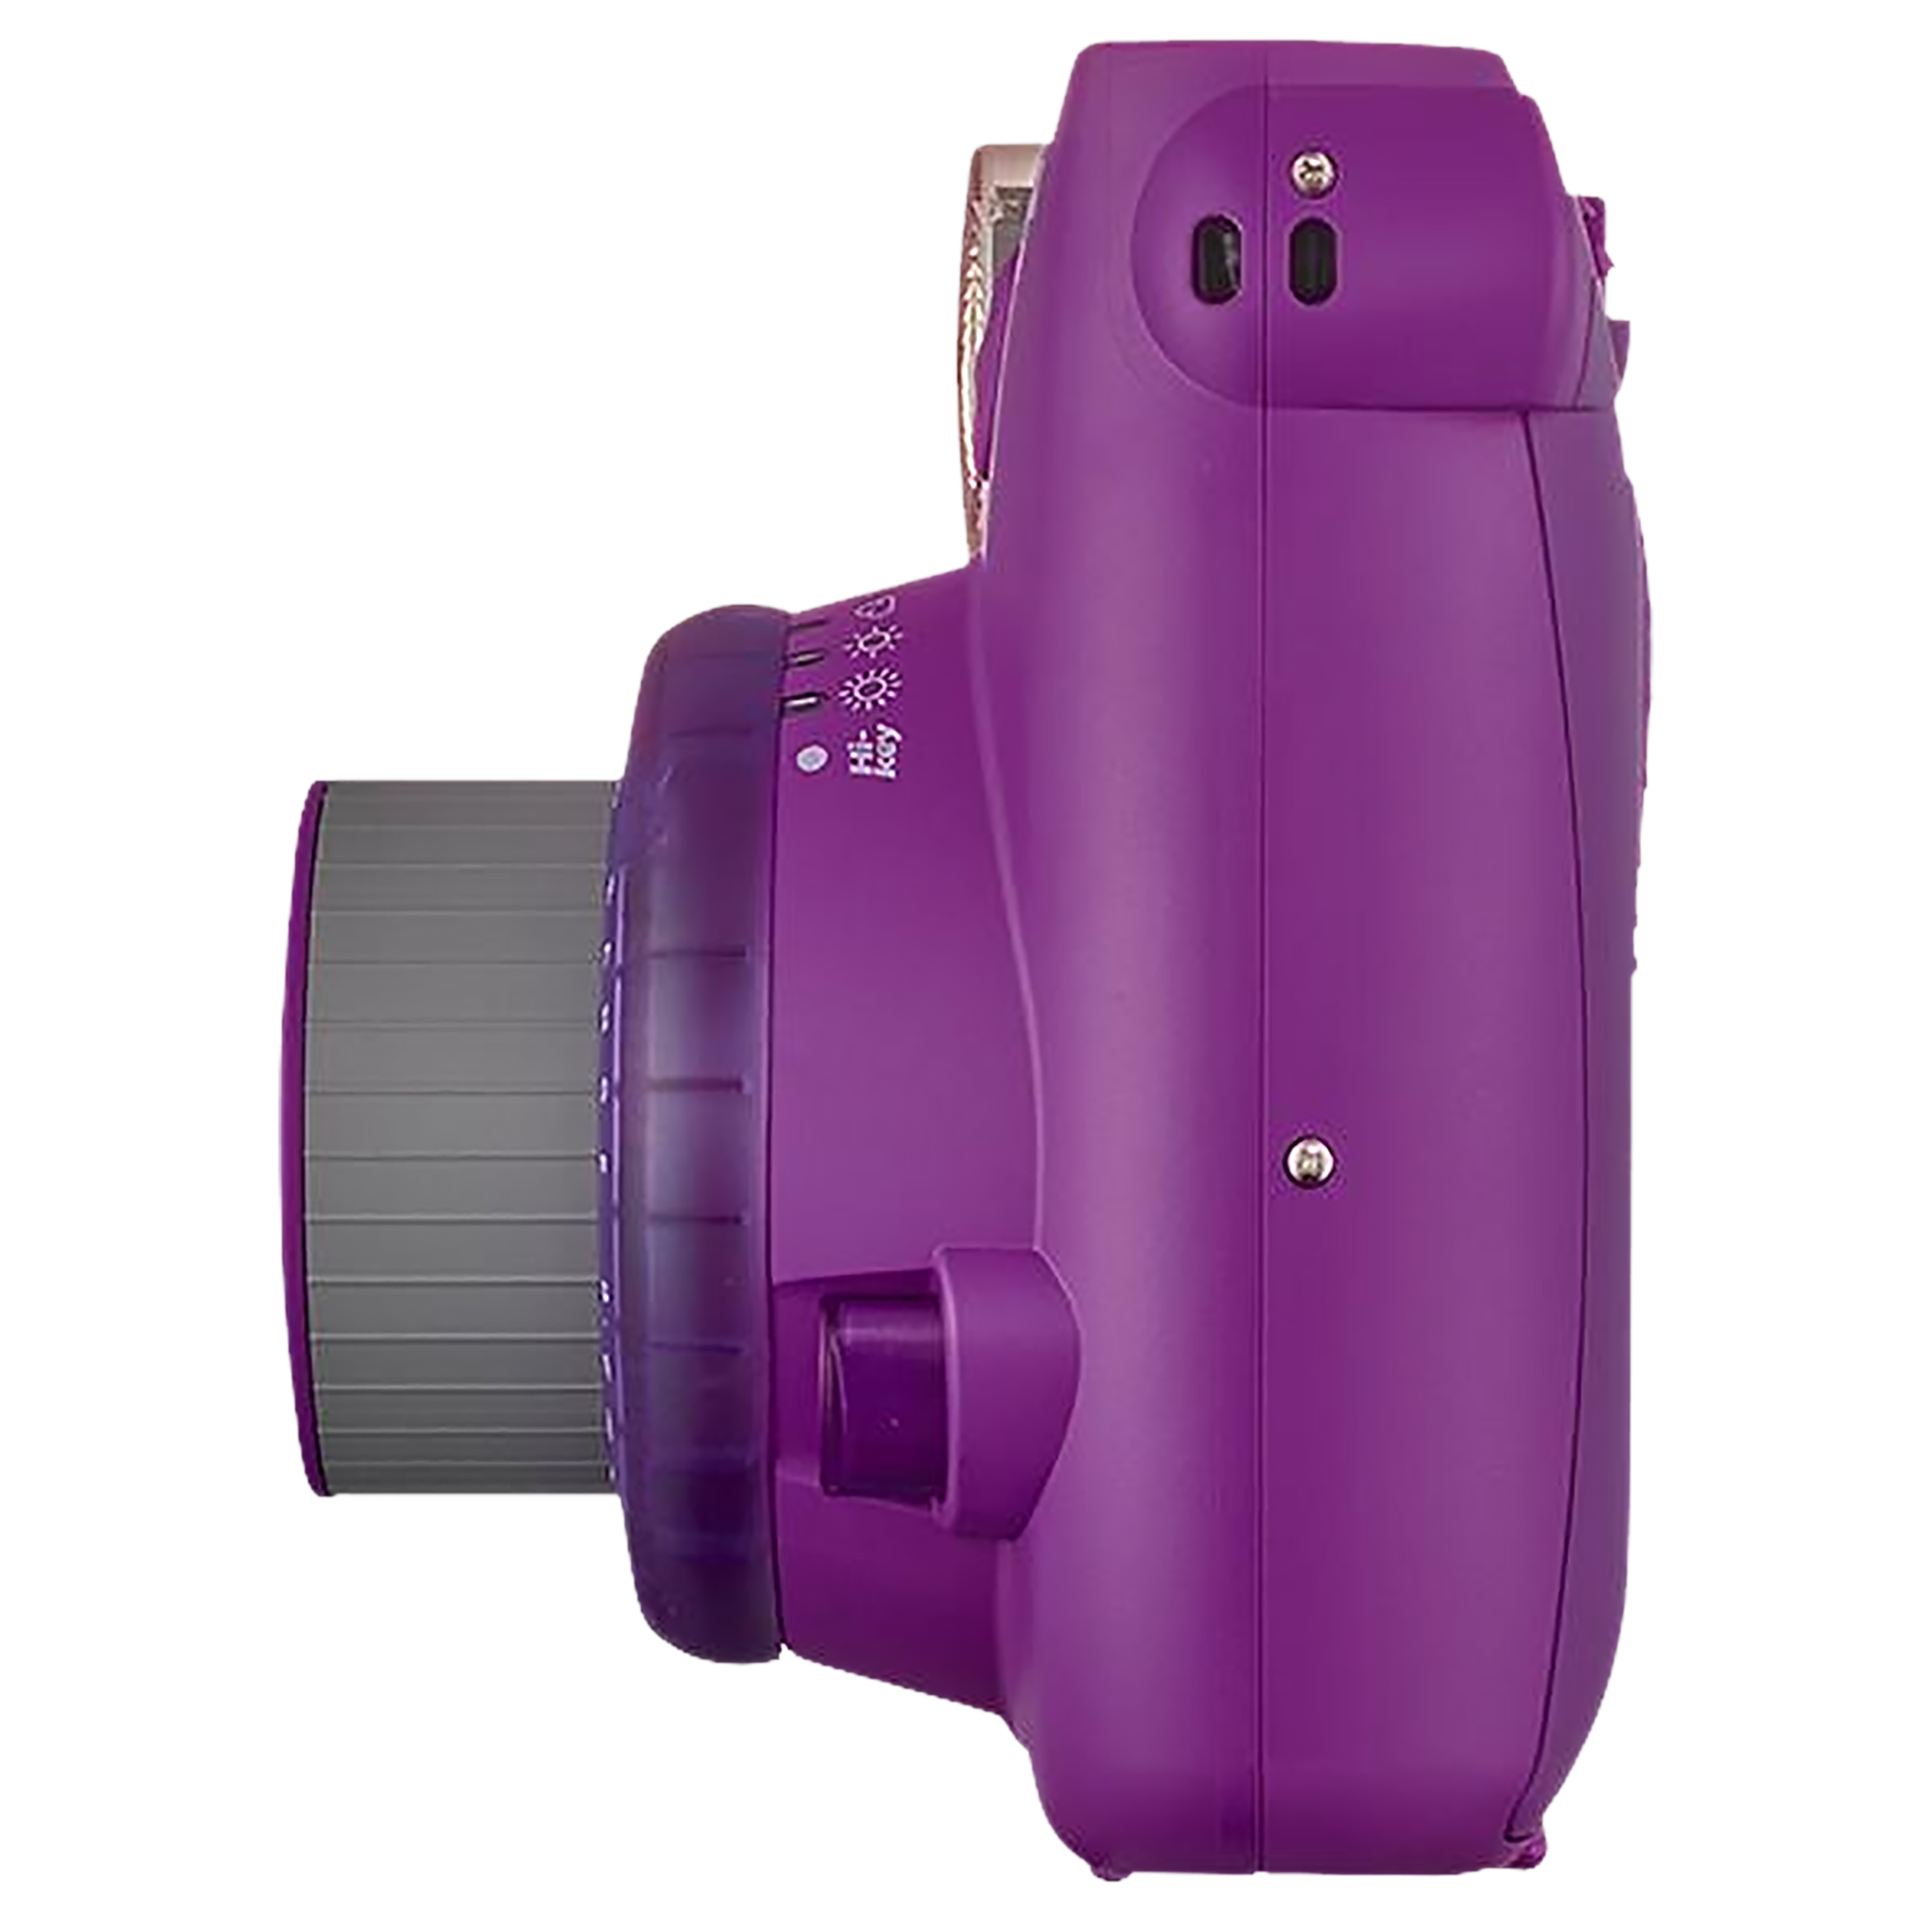 Buy Fujifilm Instax Mini 9 Instant Camera Clear Purple Online Croma